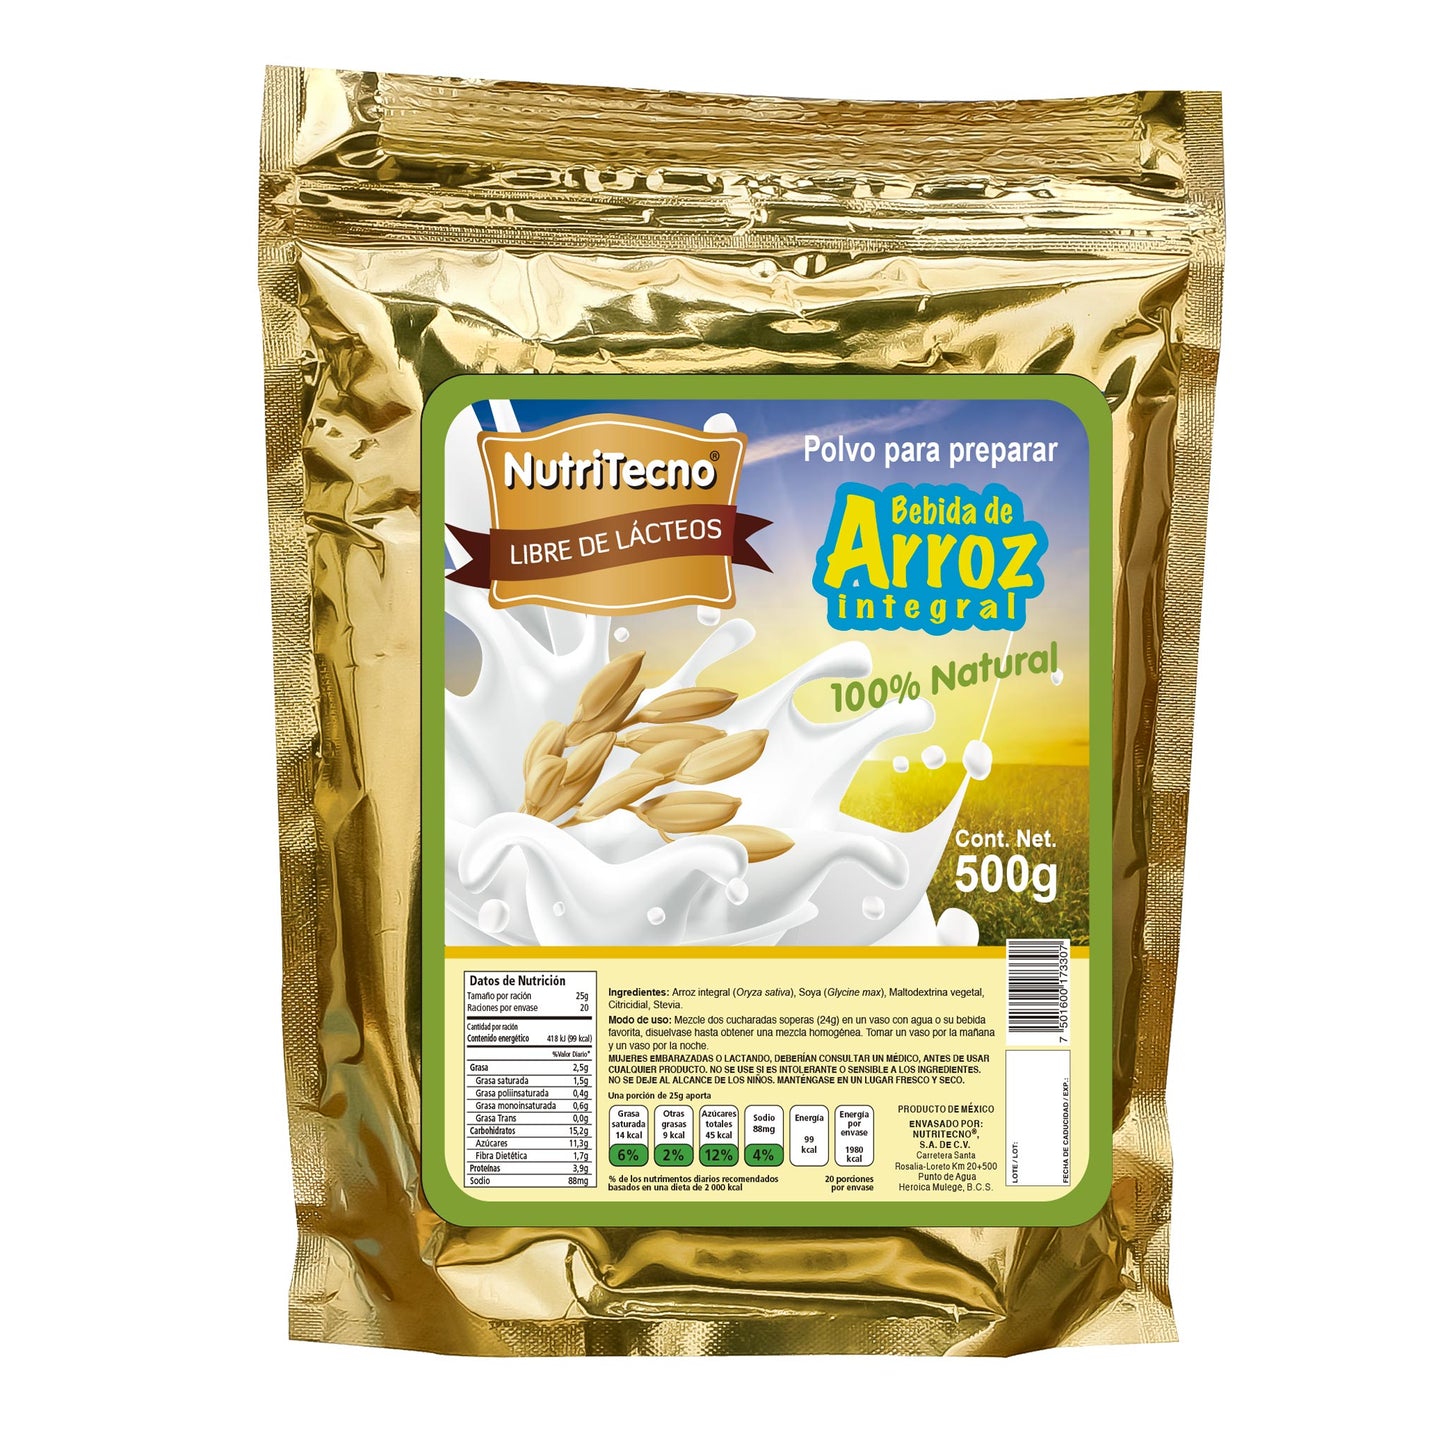 NUTRITECNO ® polvo de arroz 500g